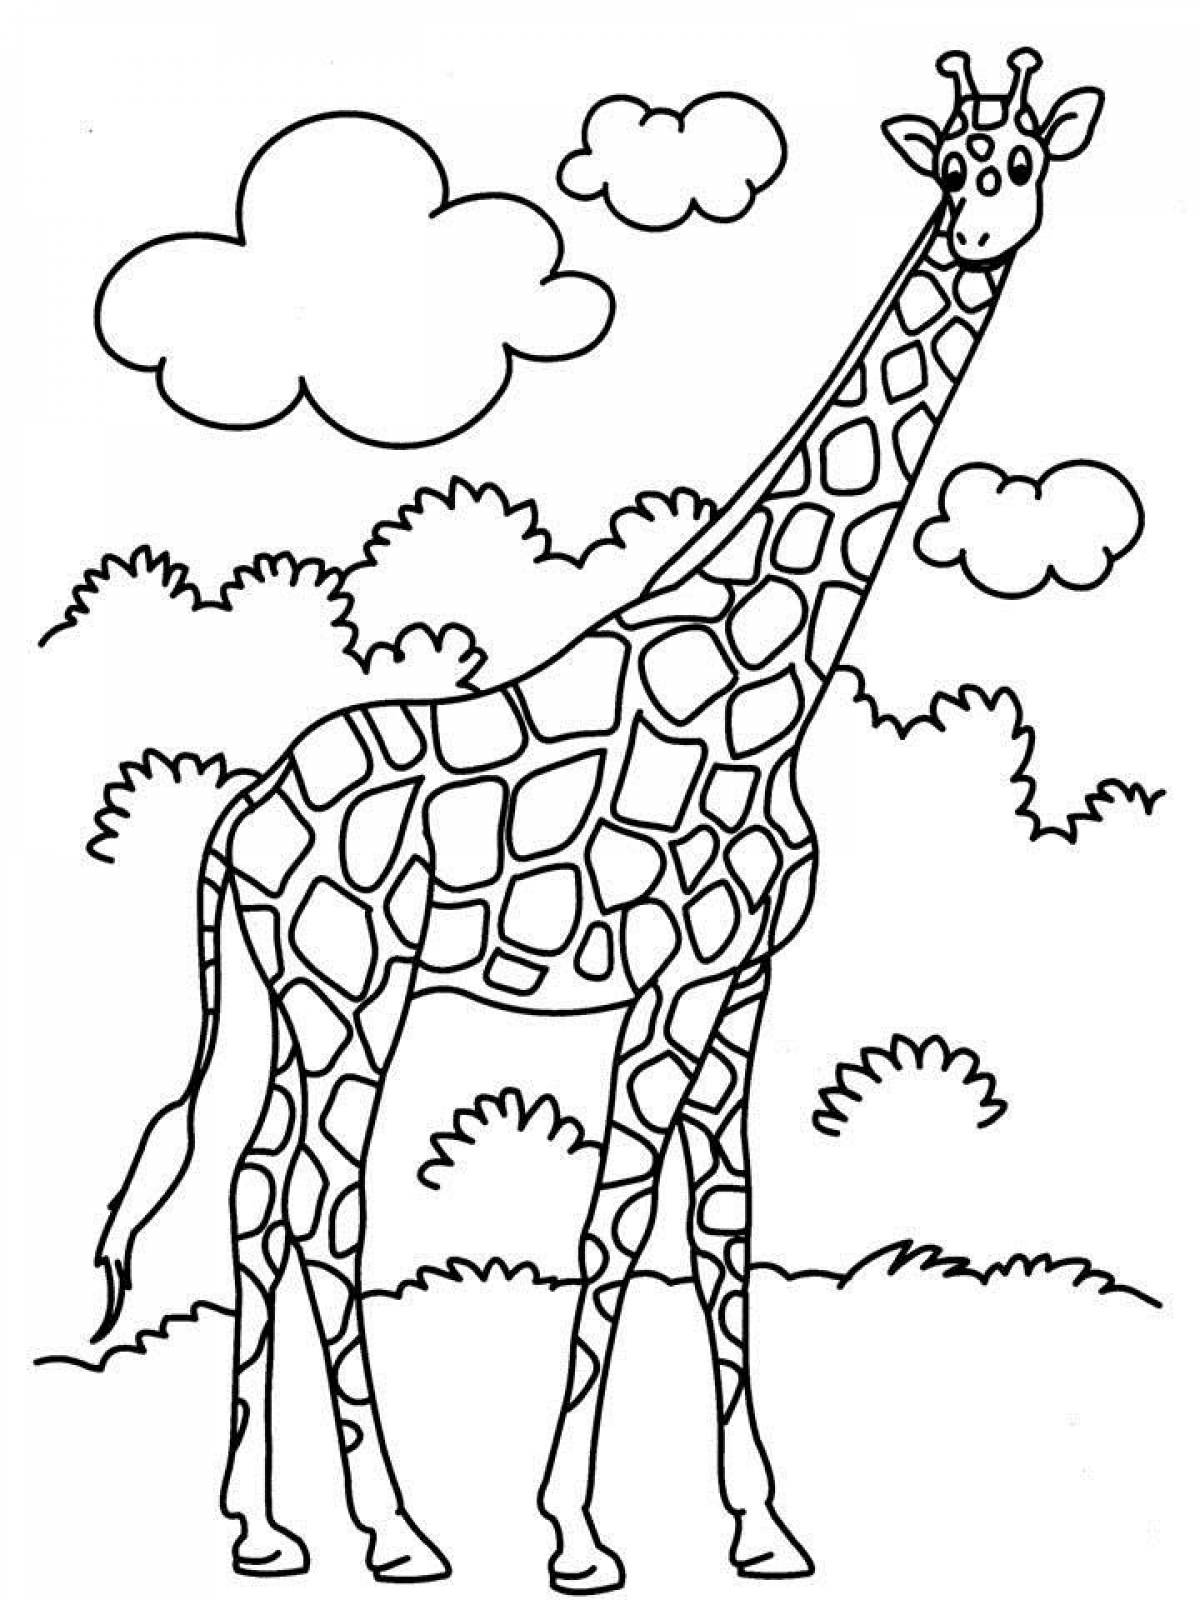 Great pre-k giraffe coloring book